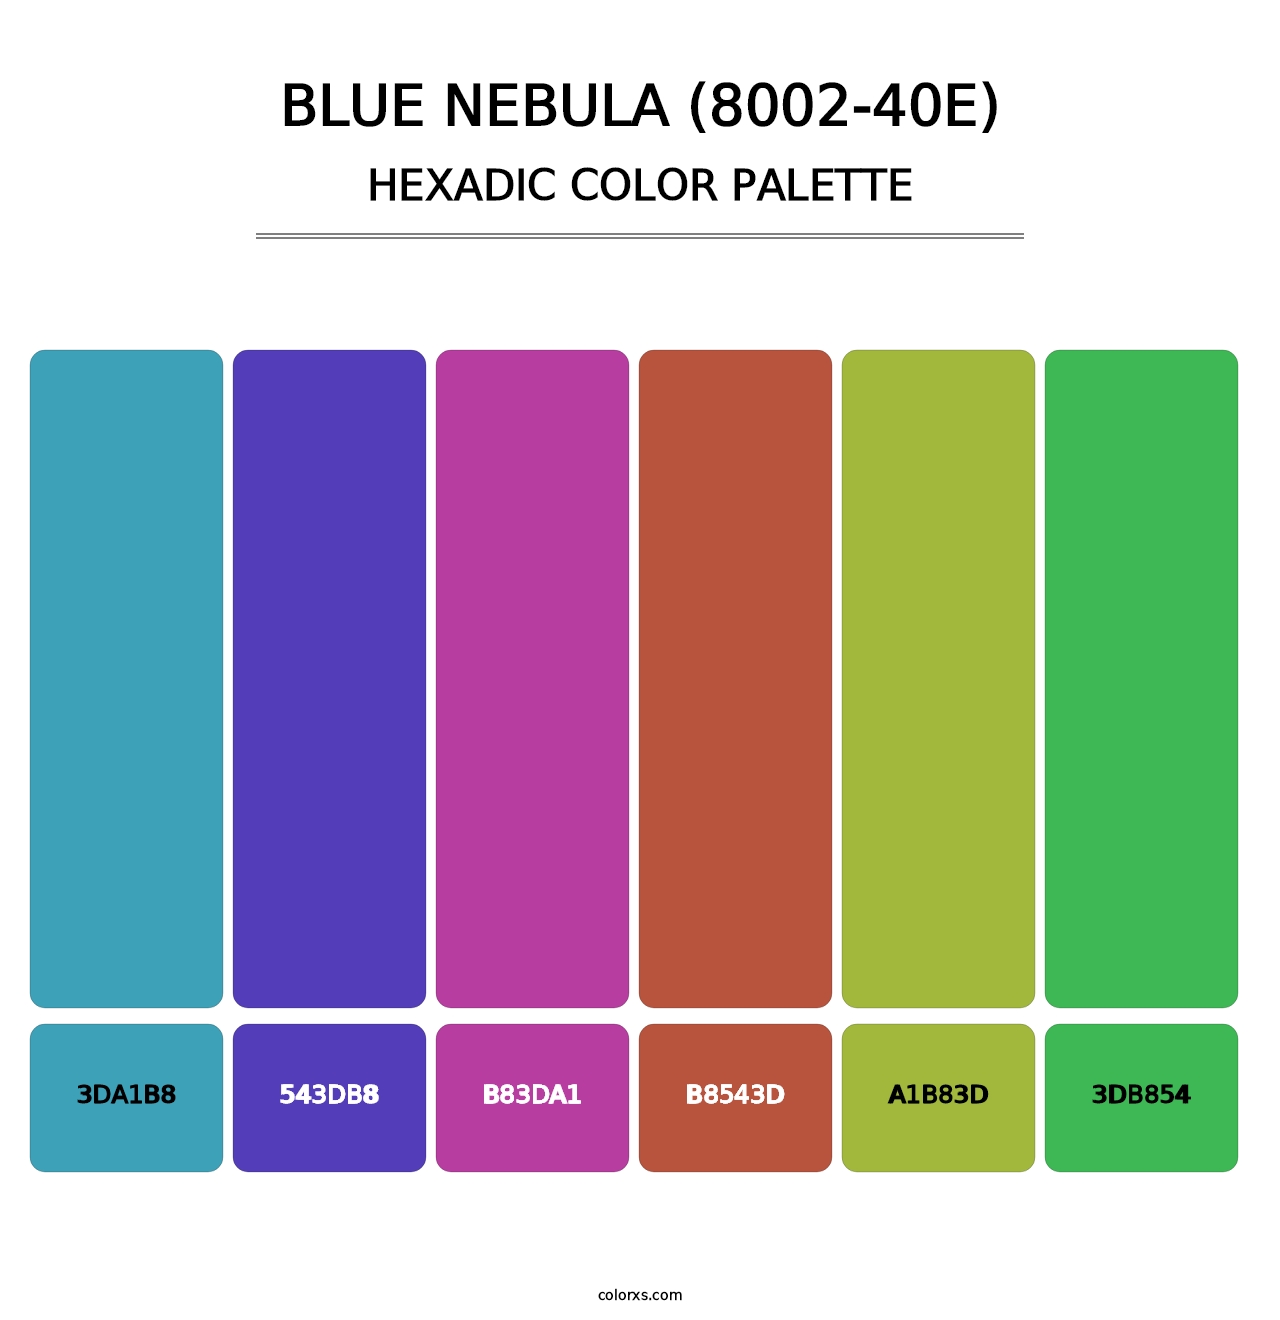 Blue Nebula (8002-40E) - Hexadic Color Palette